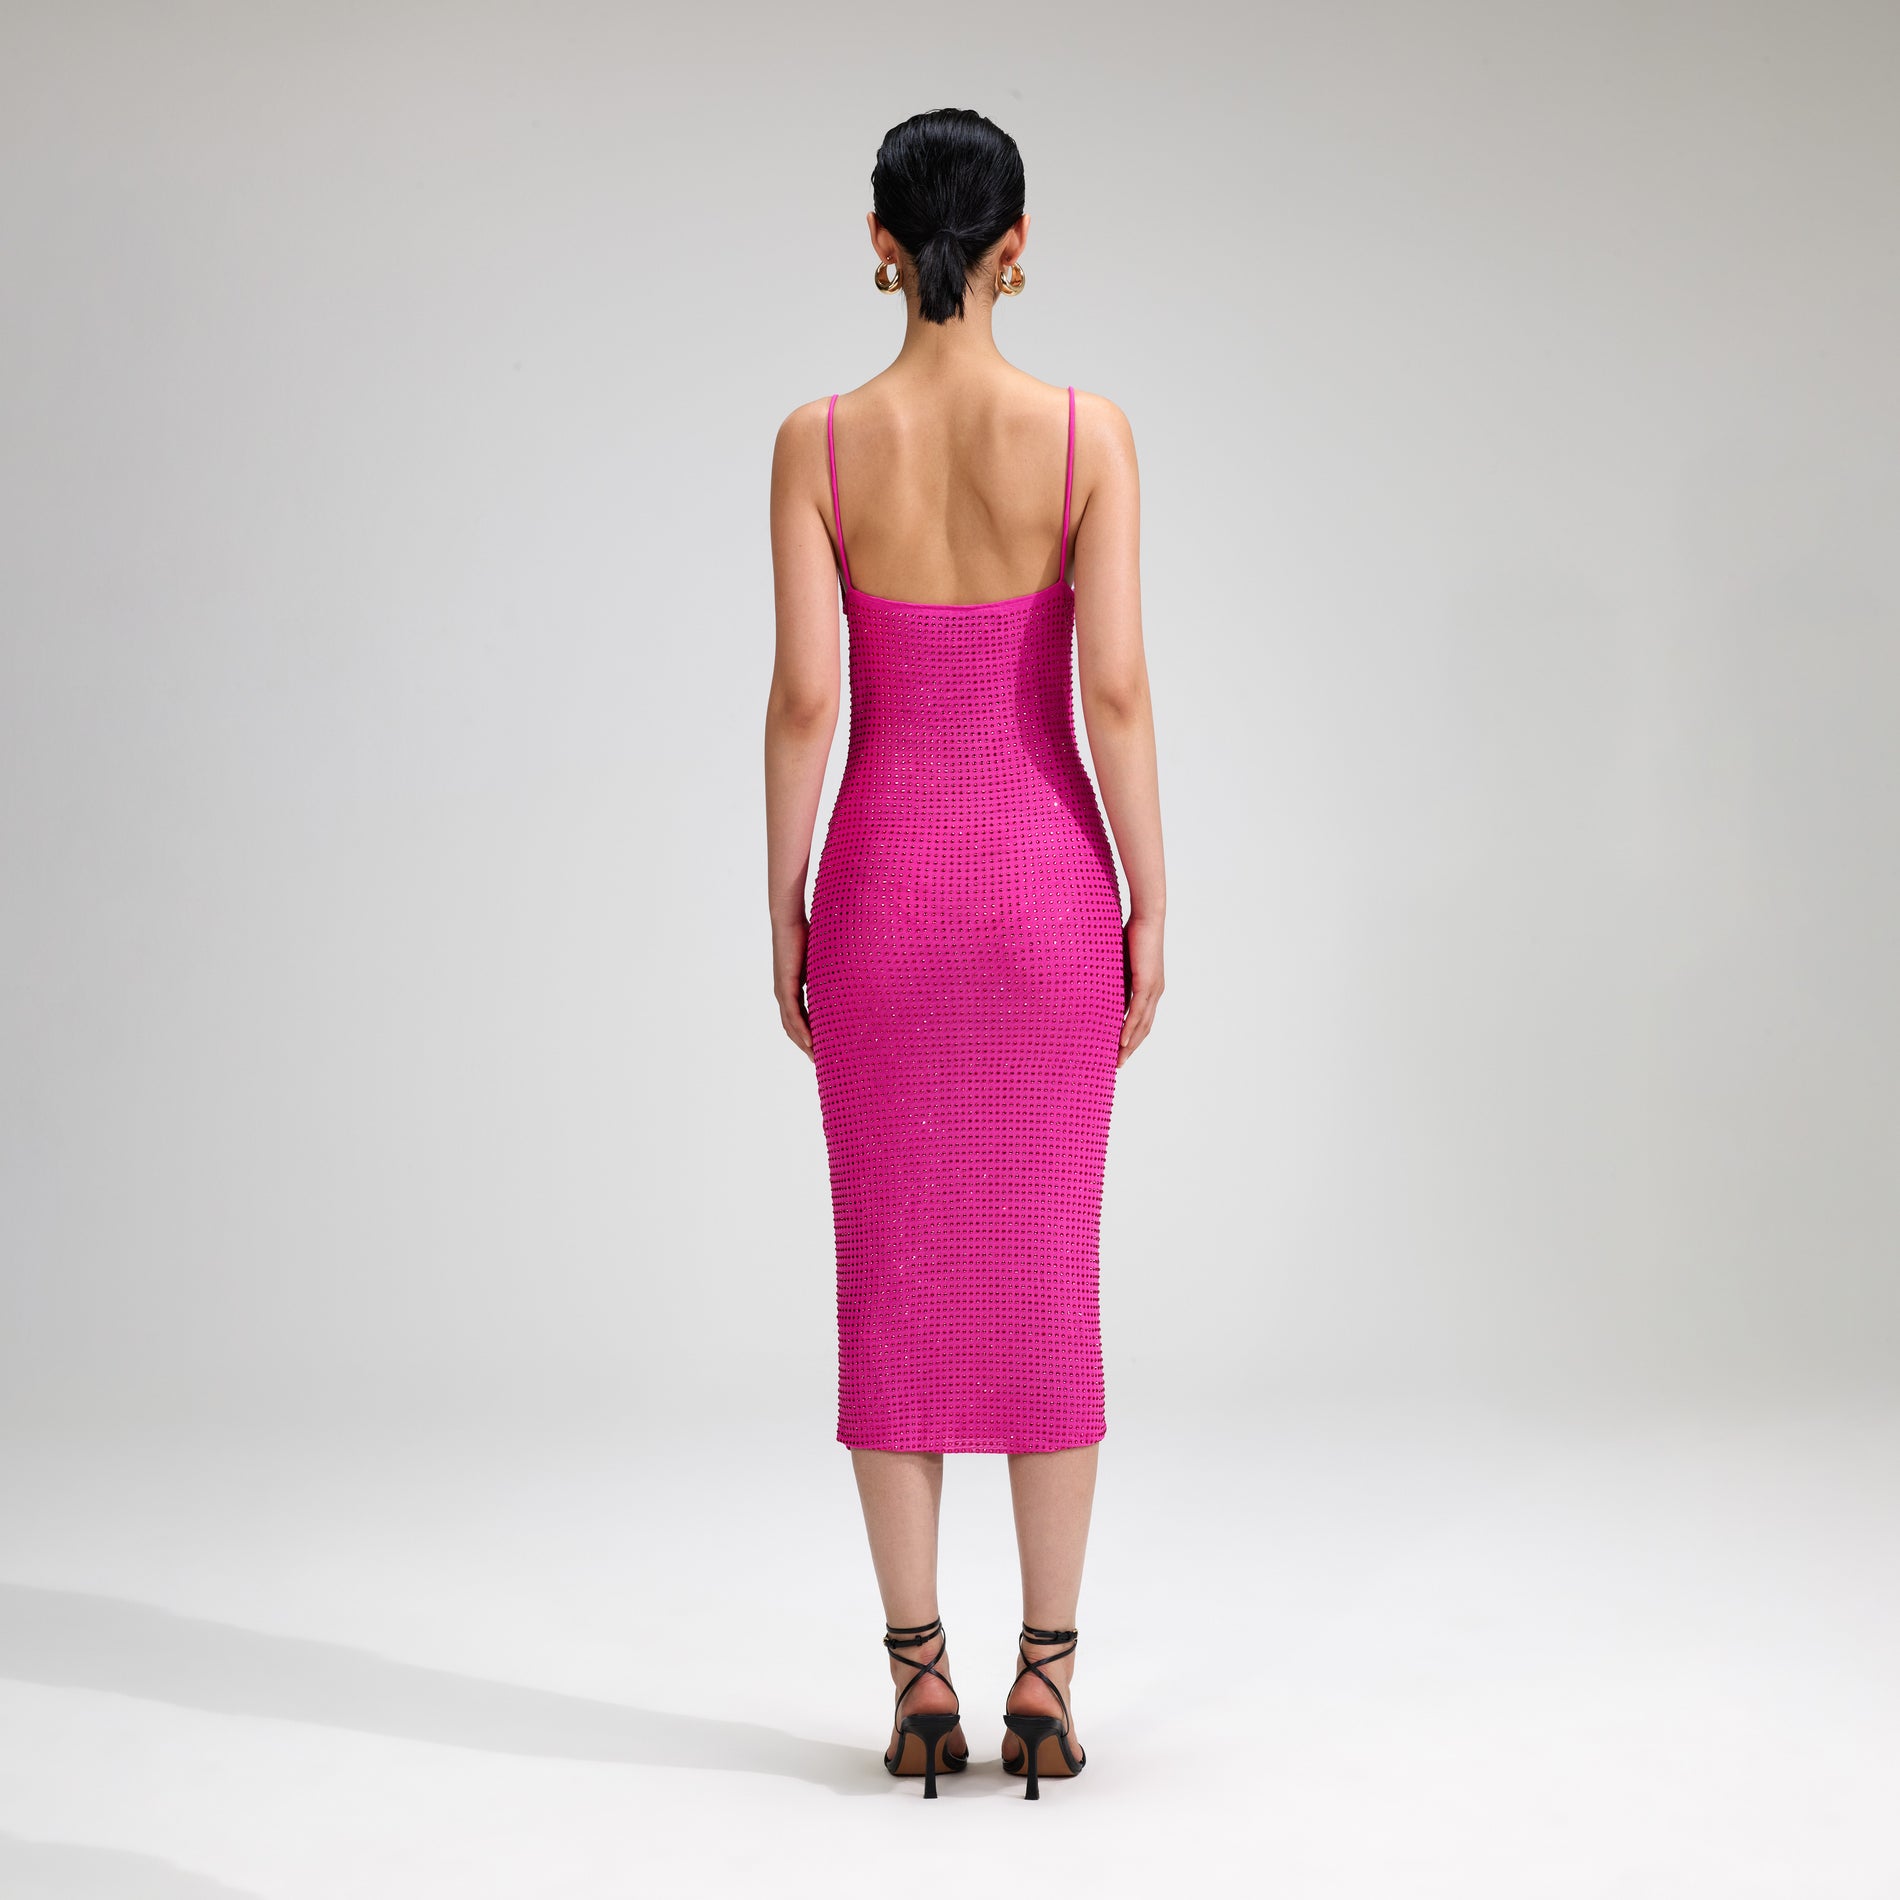 A woman wearing the Pink Rhinestone Midi Dress